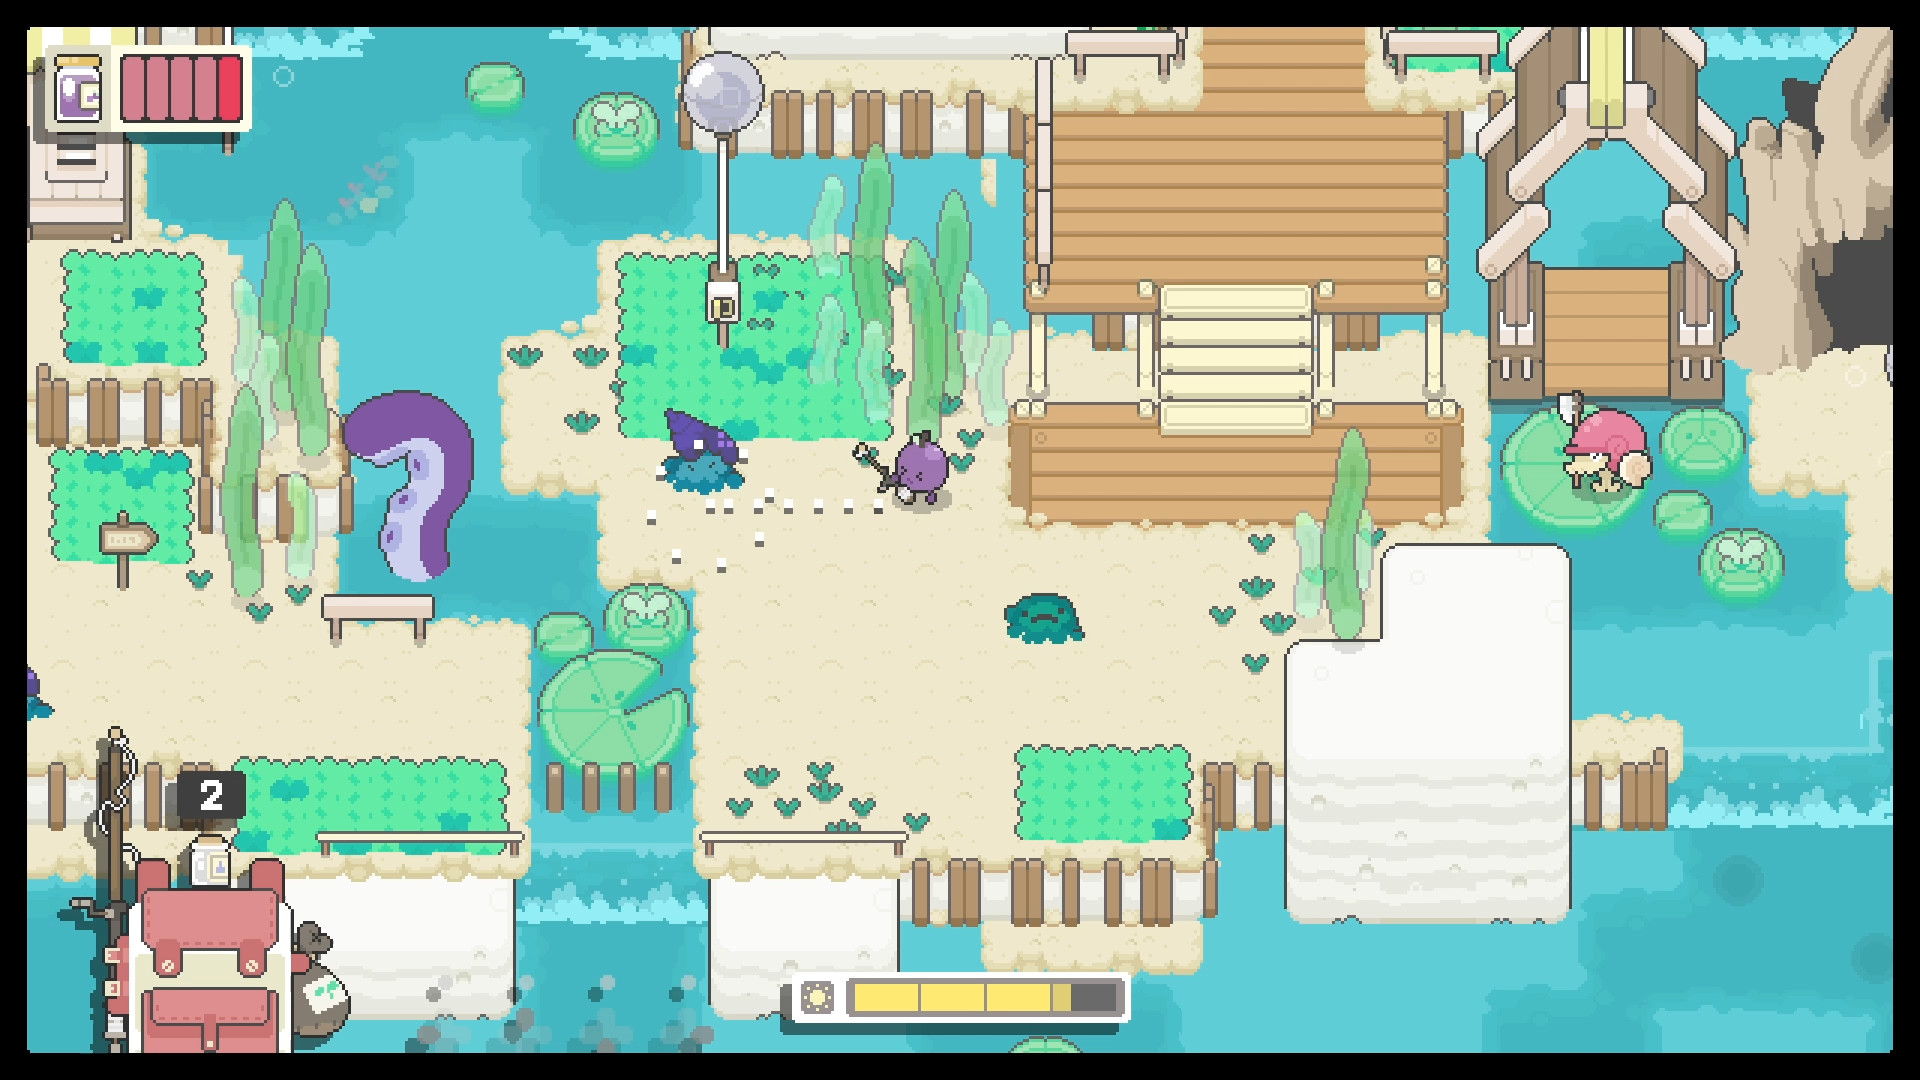 garden story gameplay